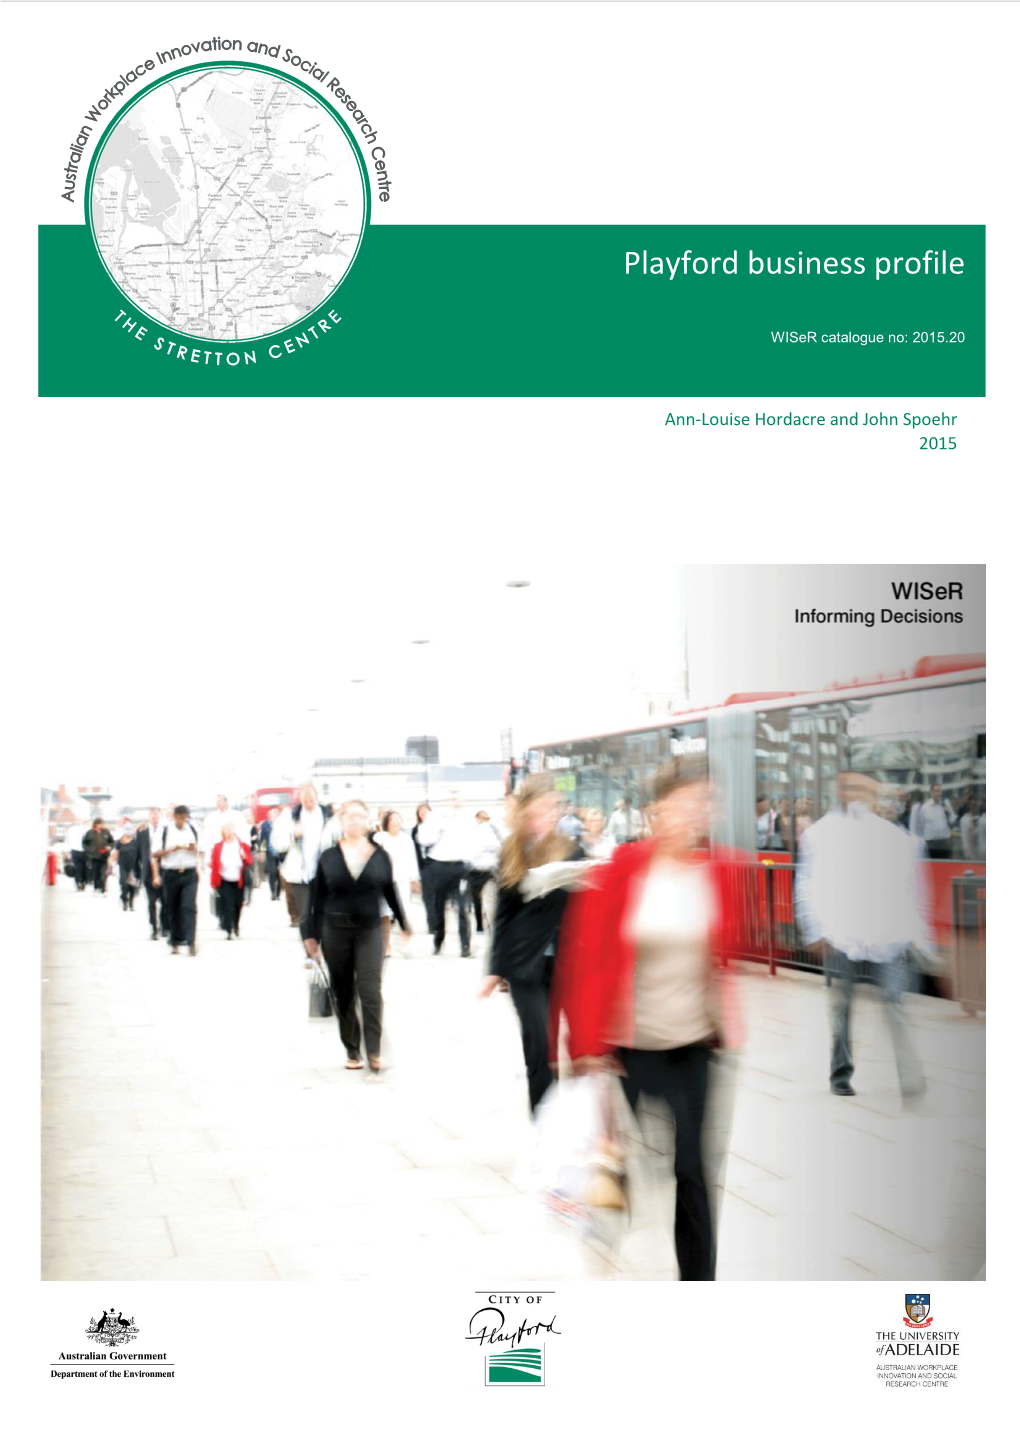 Playford Business Profile